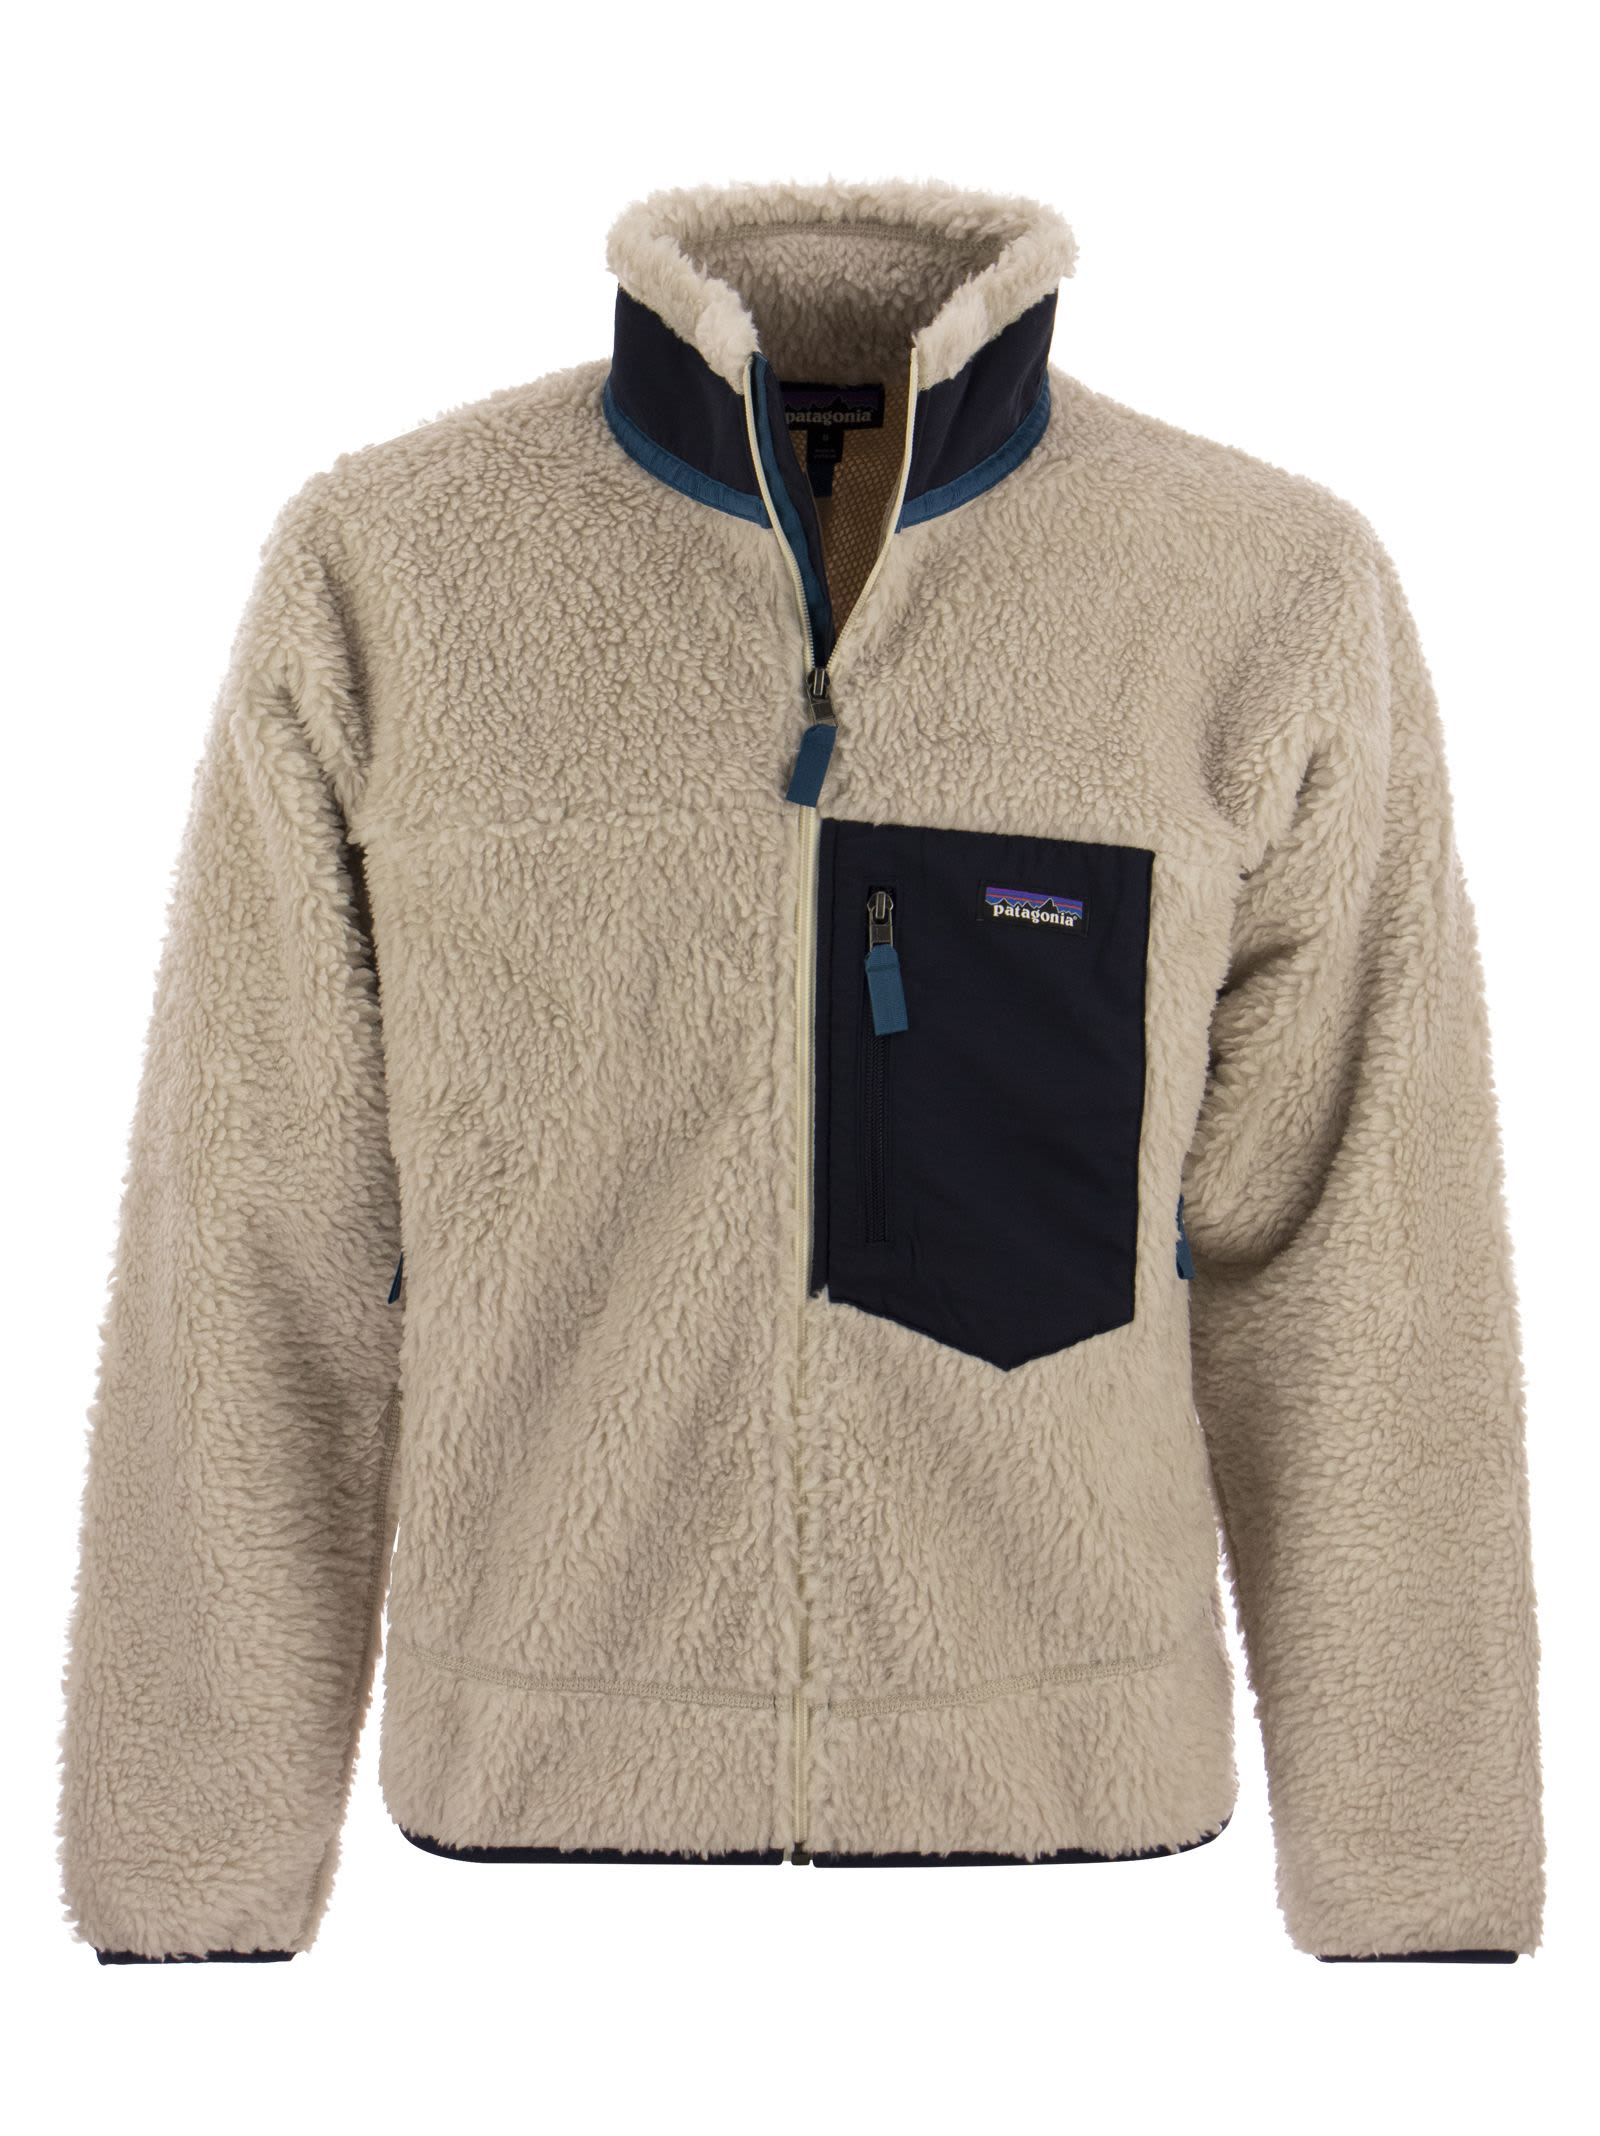 patagonia classic retro - x fleece jacket